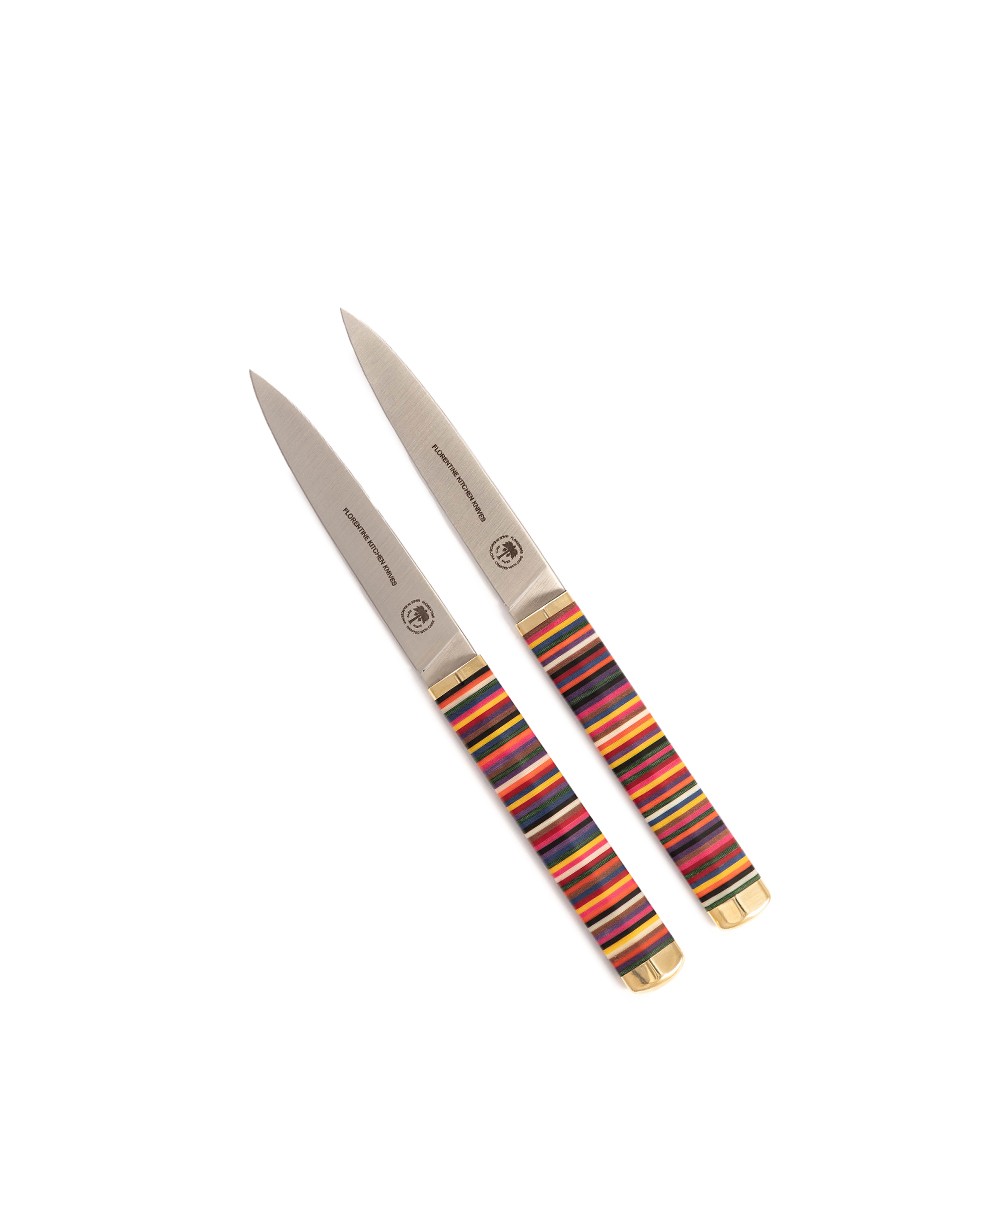 Produktbild des Florentine Table Knife in mixed colors von Florentine Kitchen Knives im RAUM concept store 